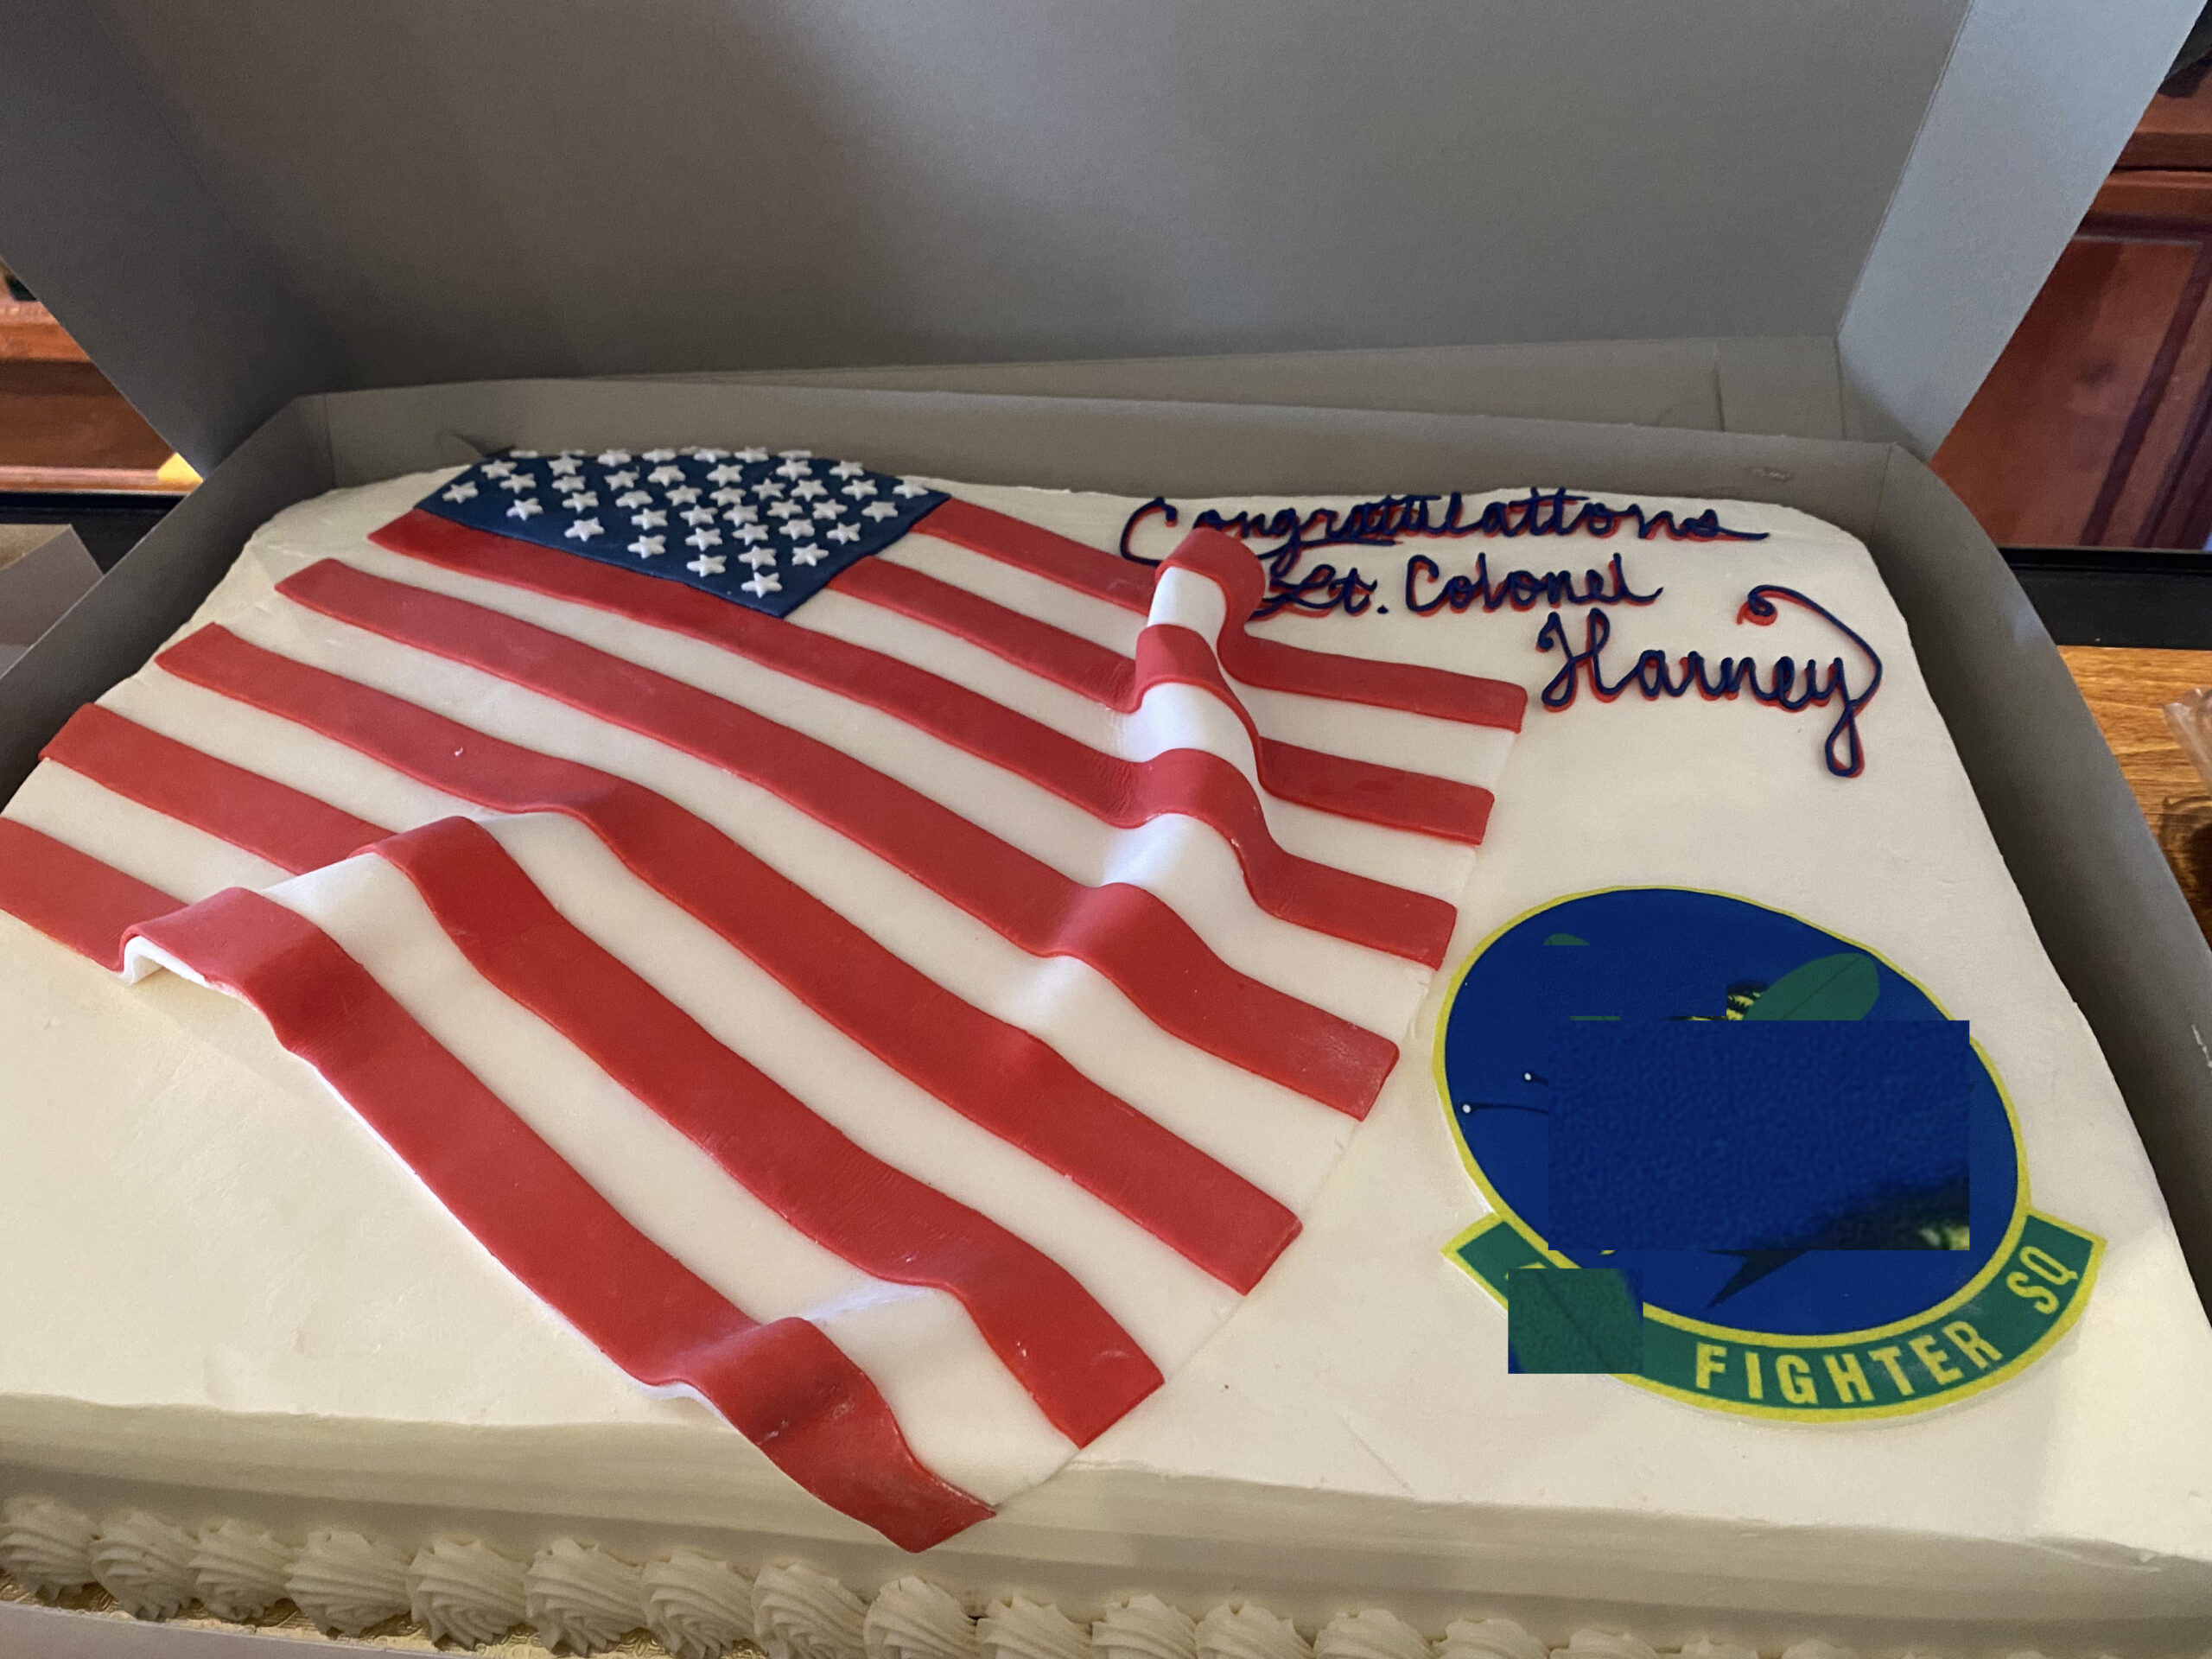 fighter squadron cake